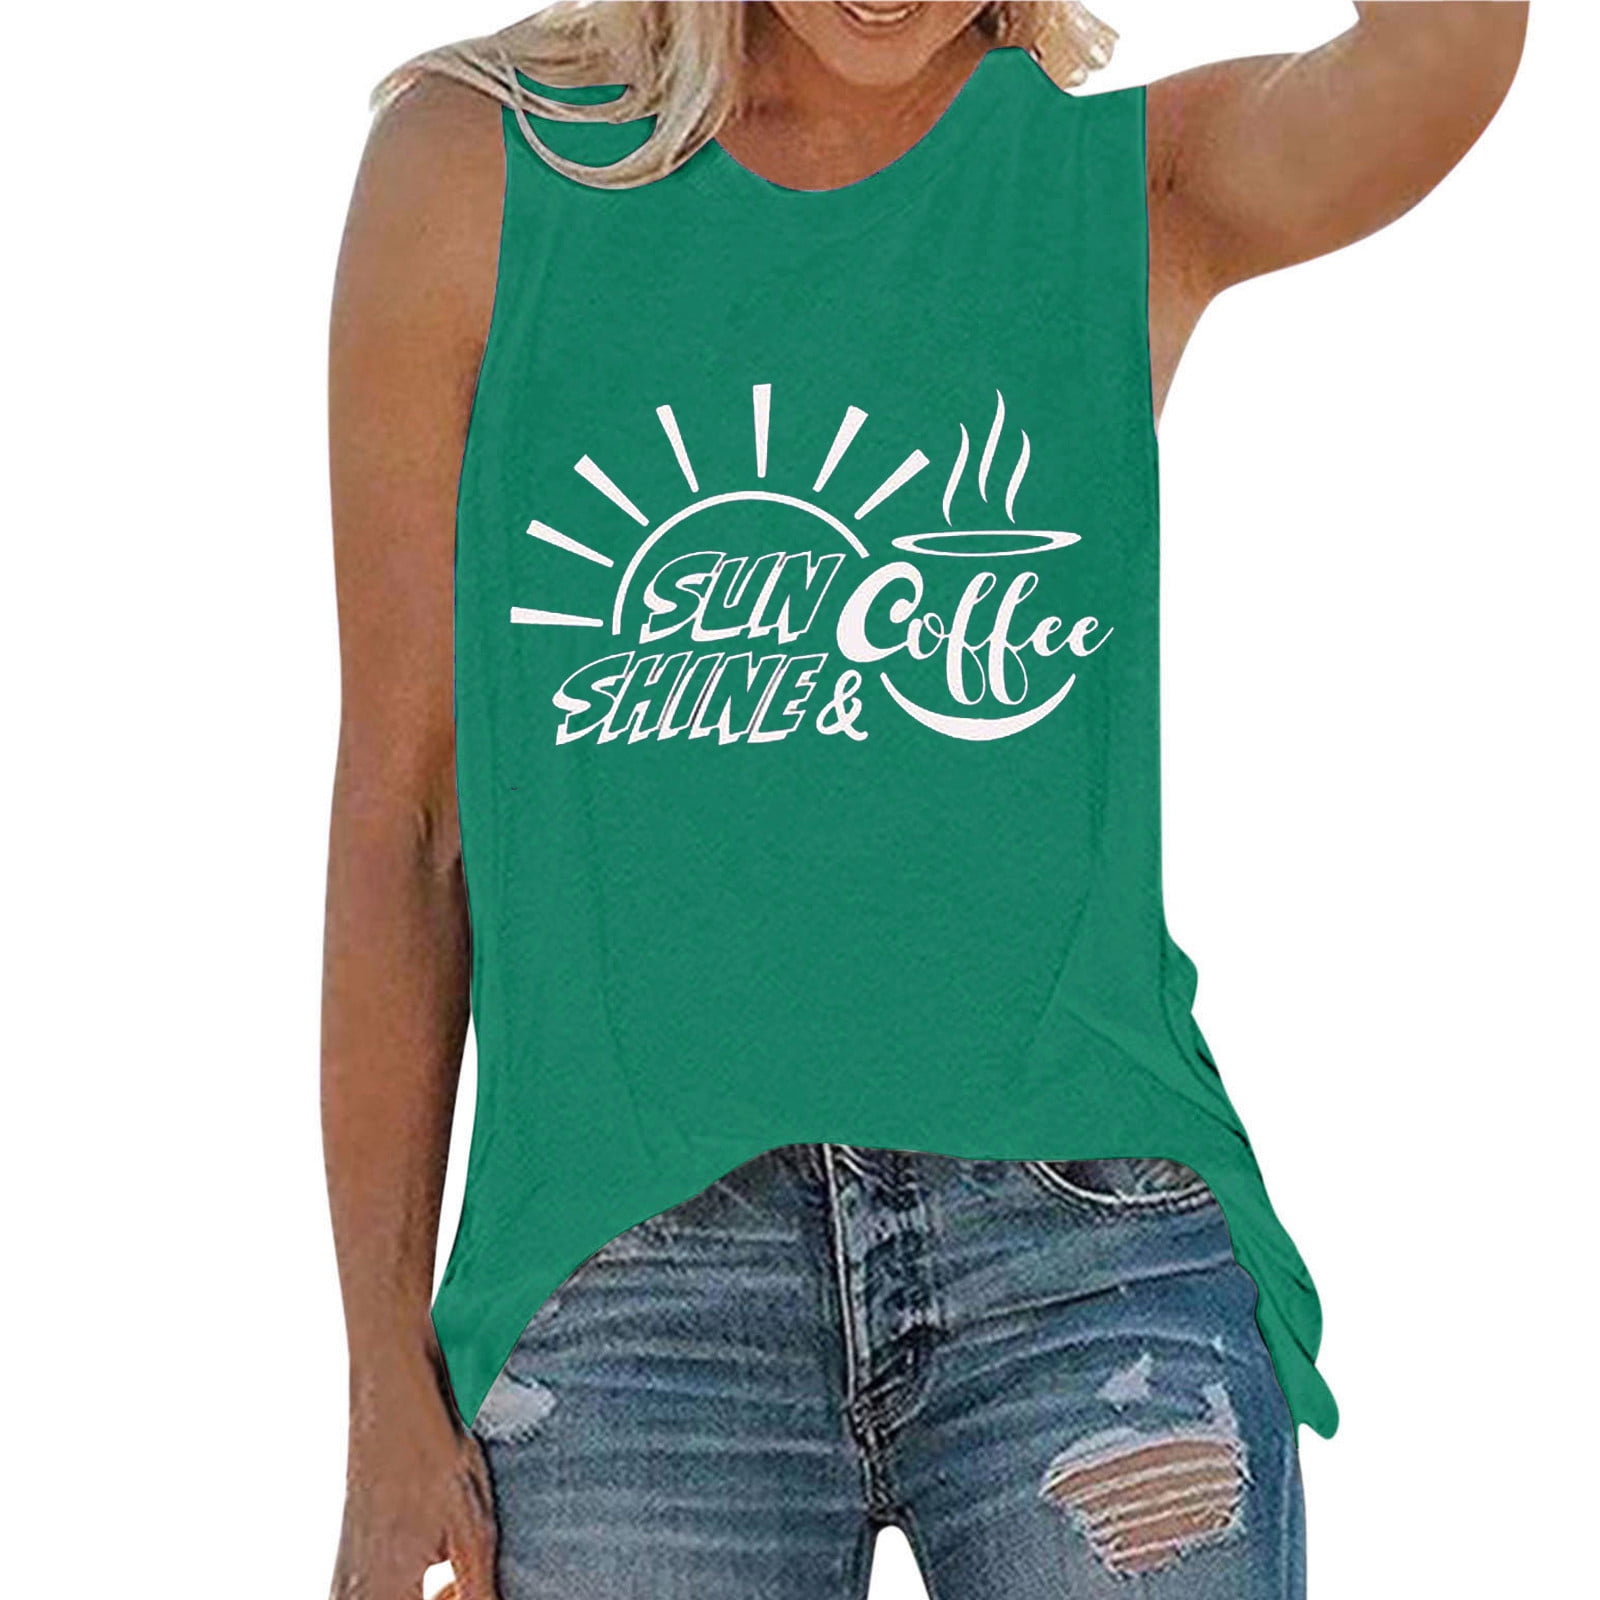 Sun Shirt Cropped Summer Shirt Cute Crop Top Sunshine Shirt Beach